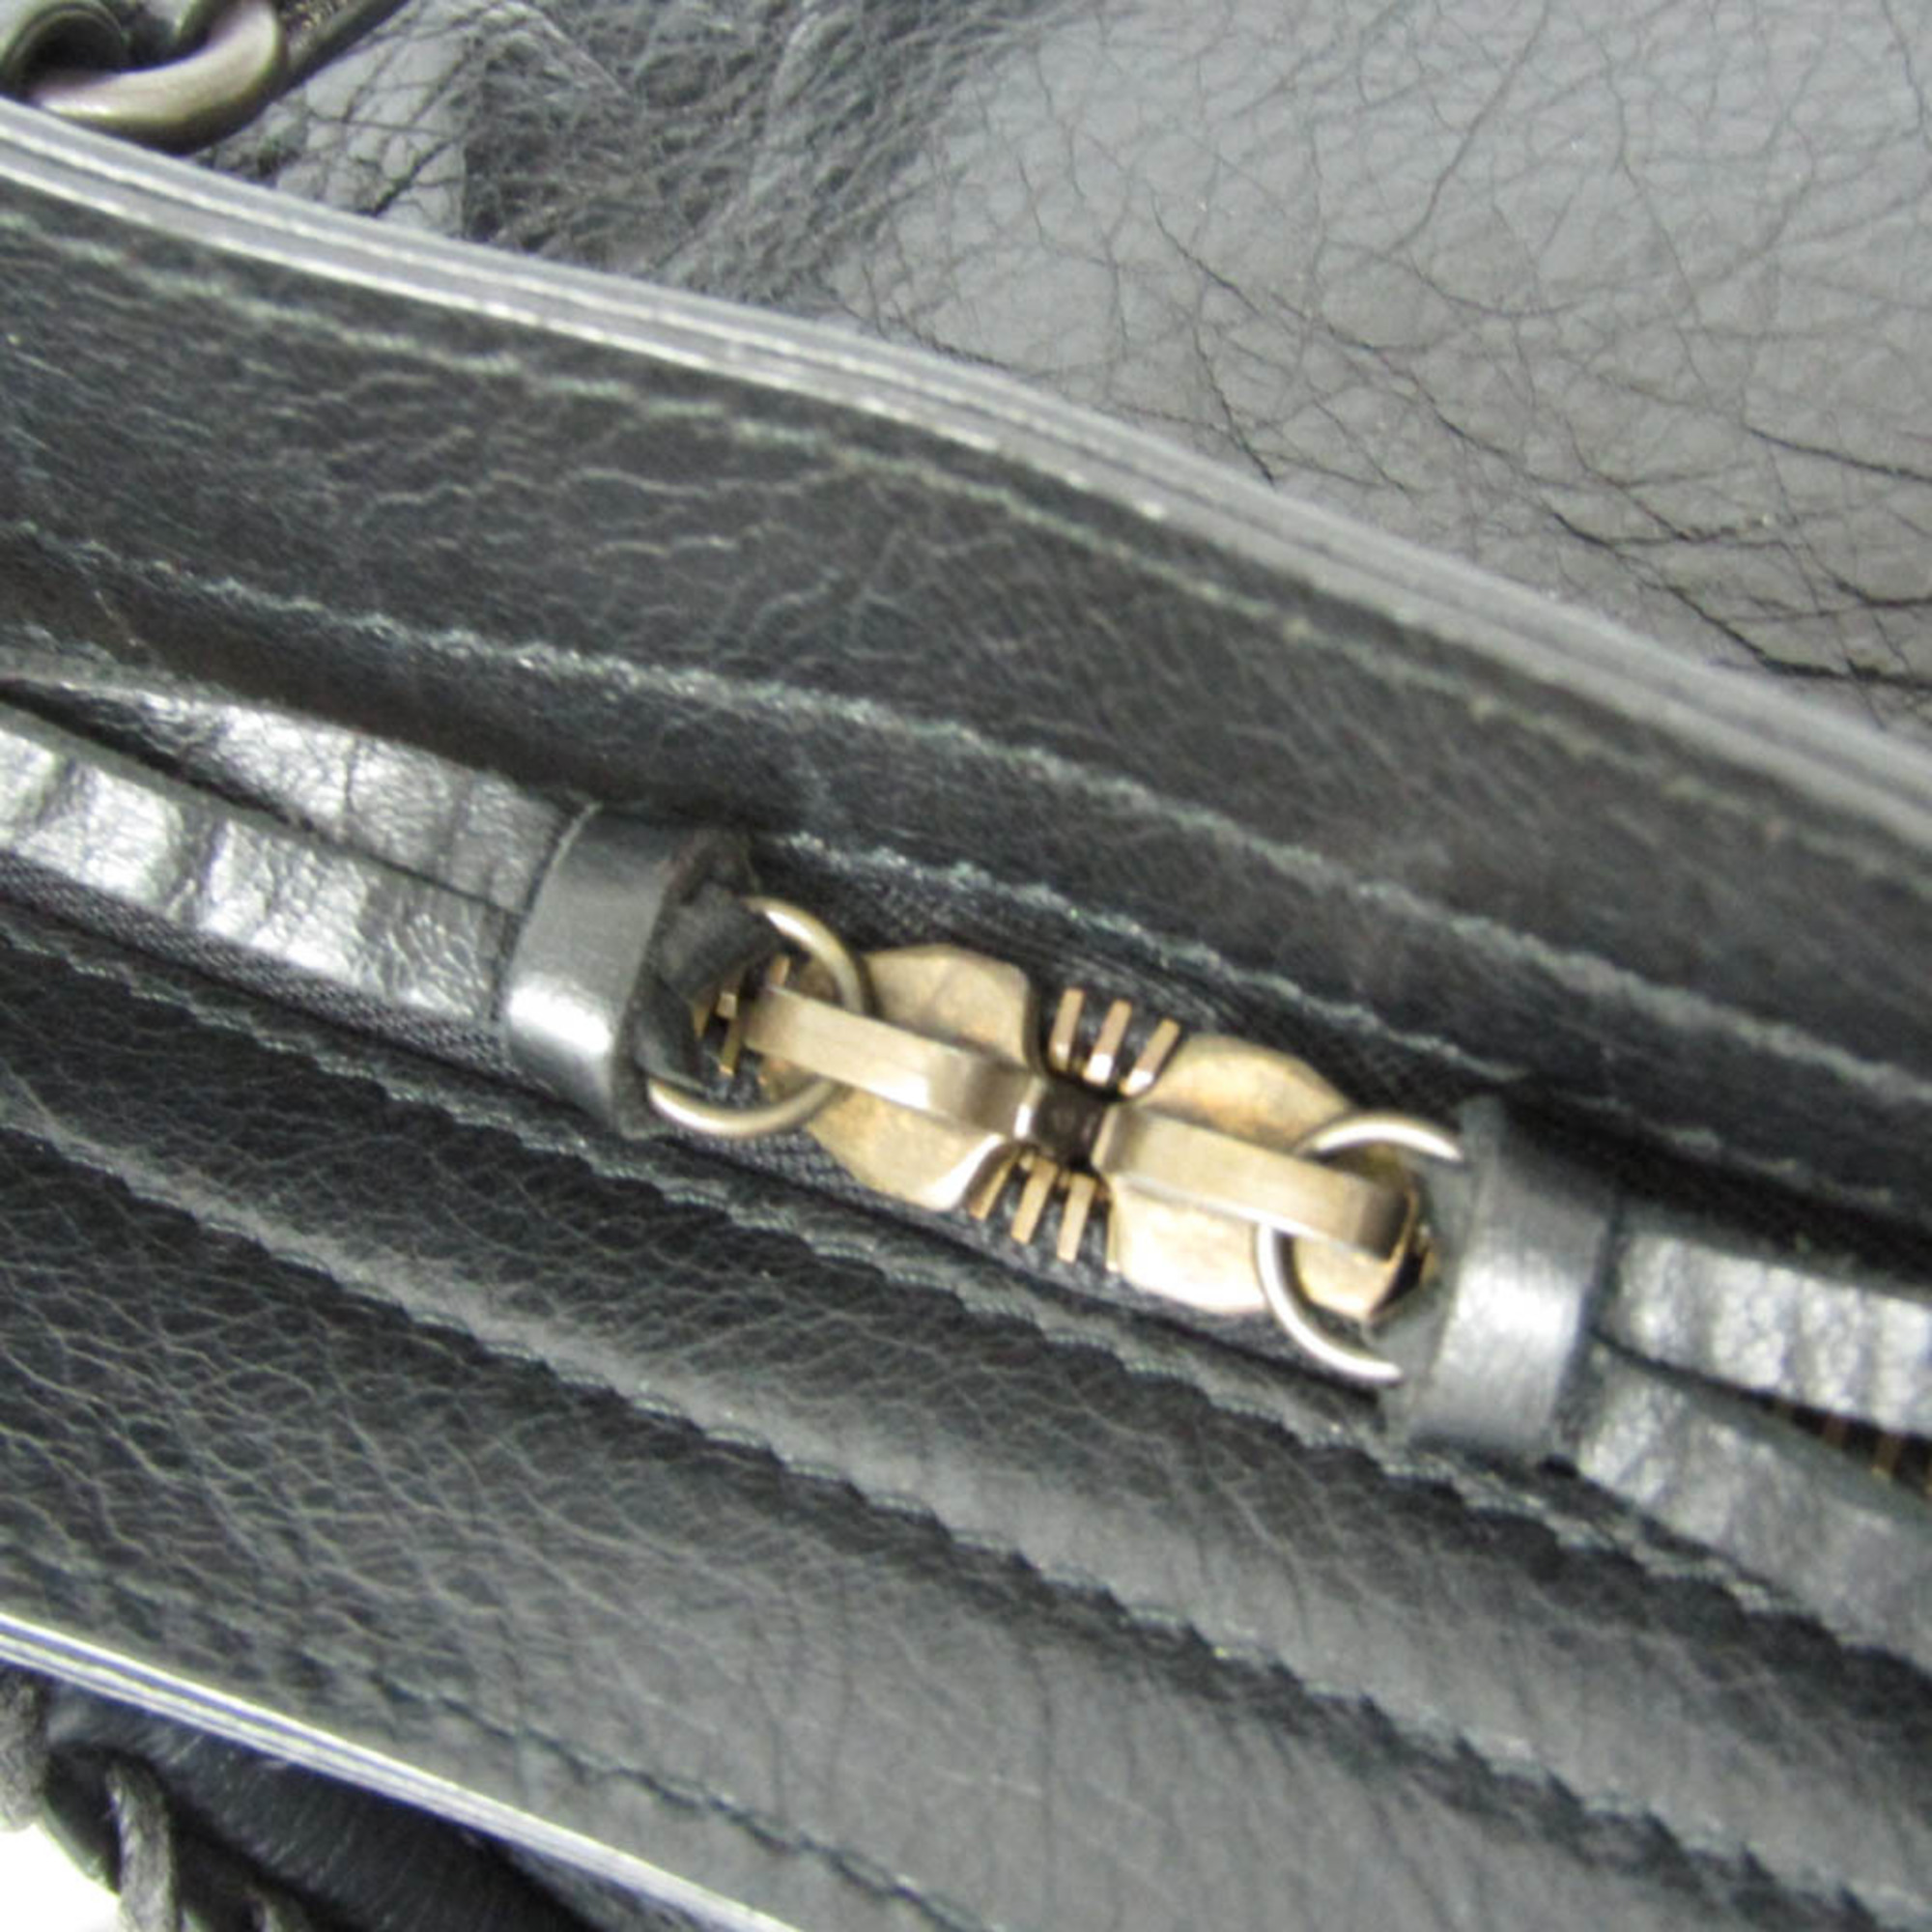 Balenciaga Vero 235216 Women's Leather Handbag,Shoulder Bag Black